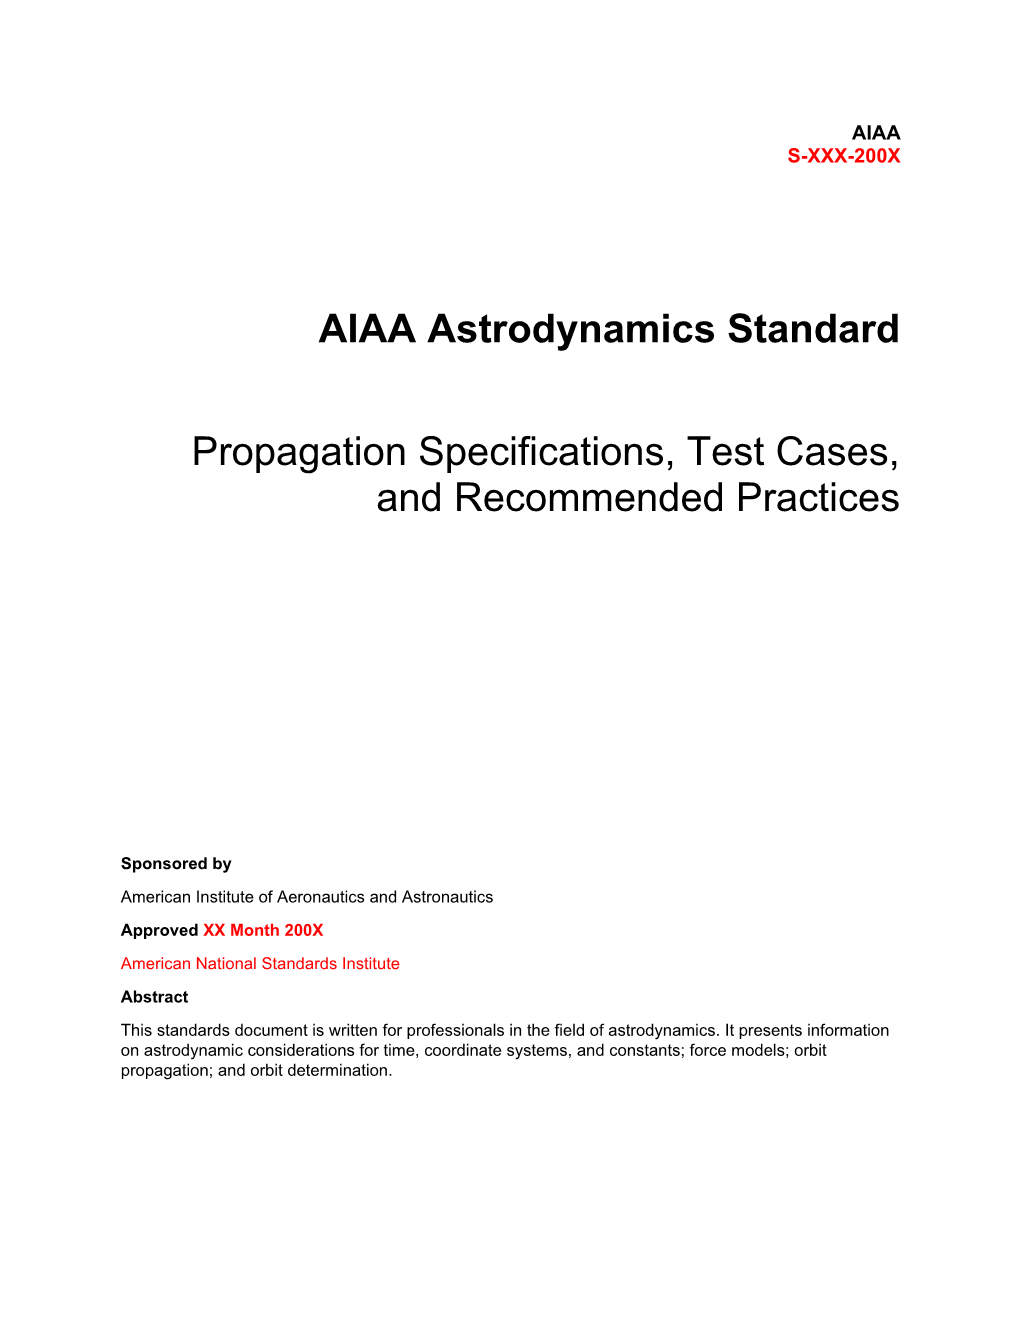 AIAA Astrodnamics Standard